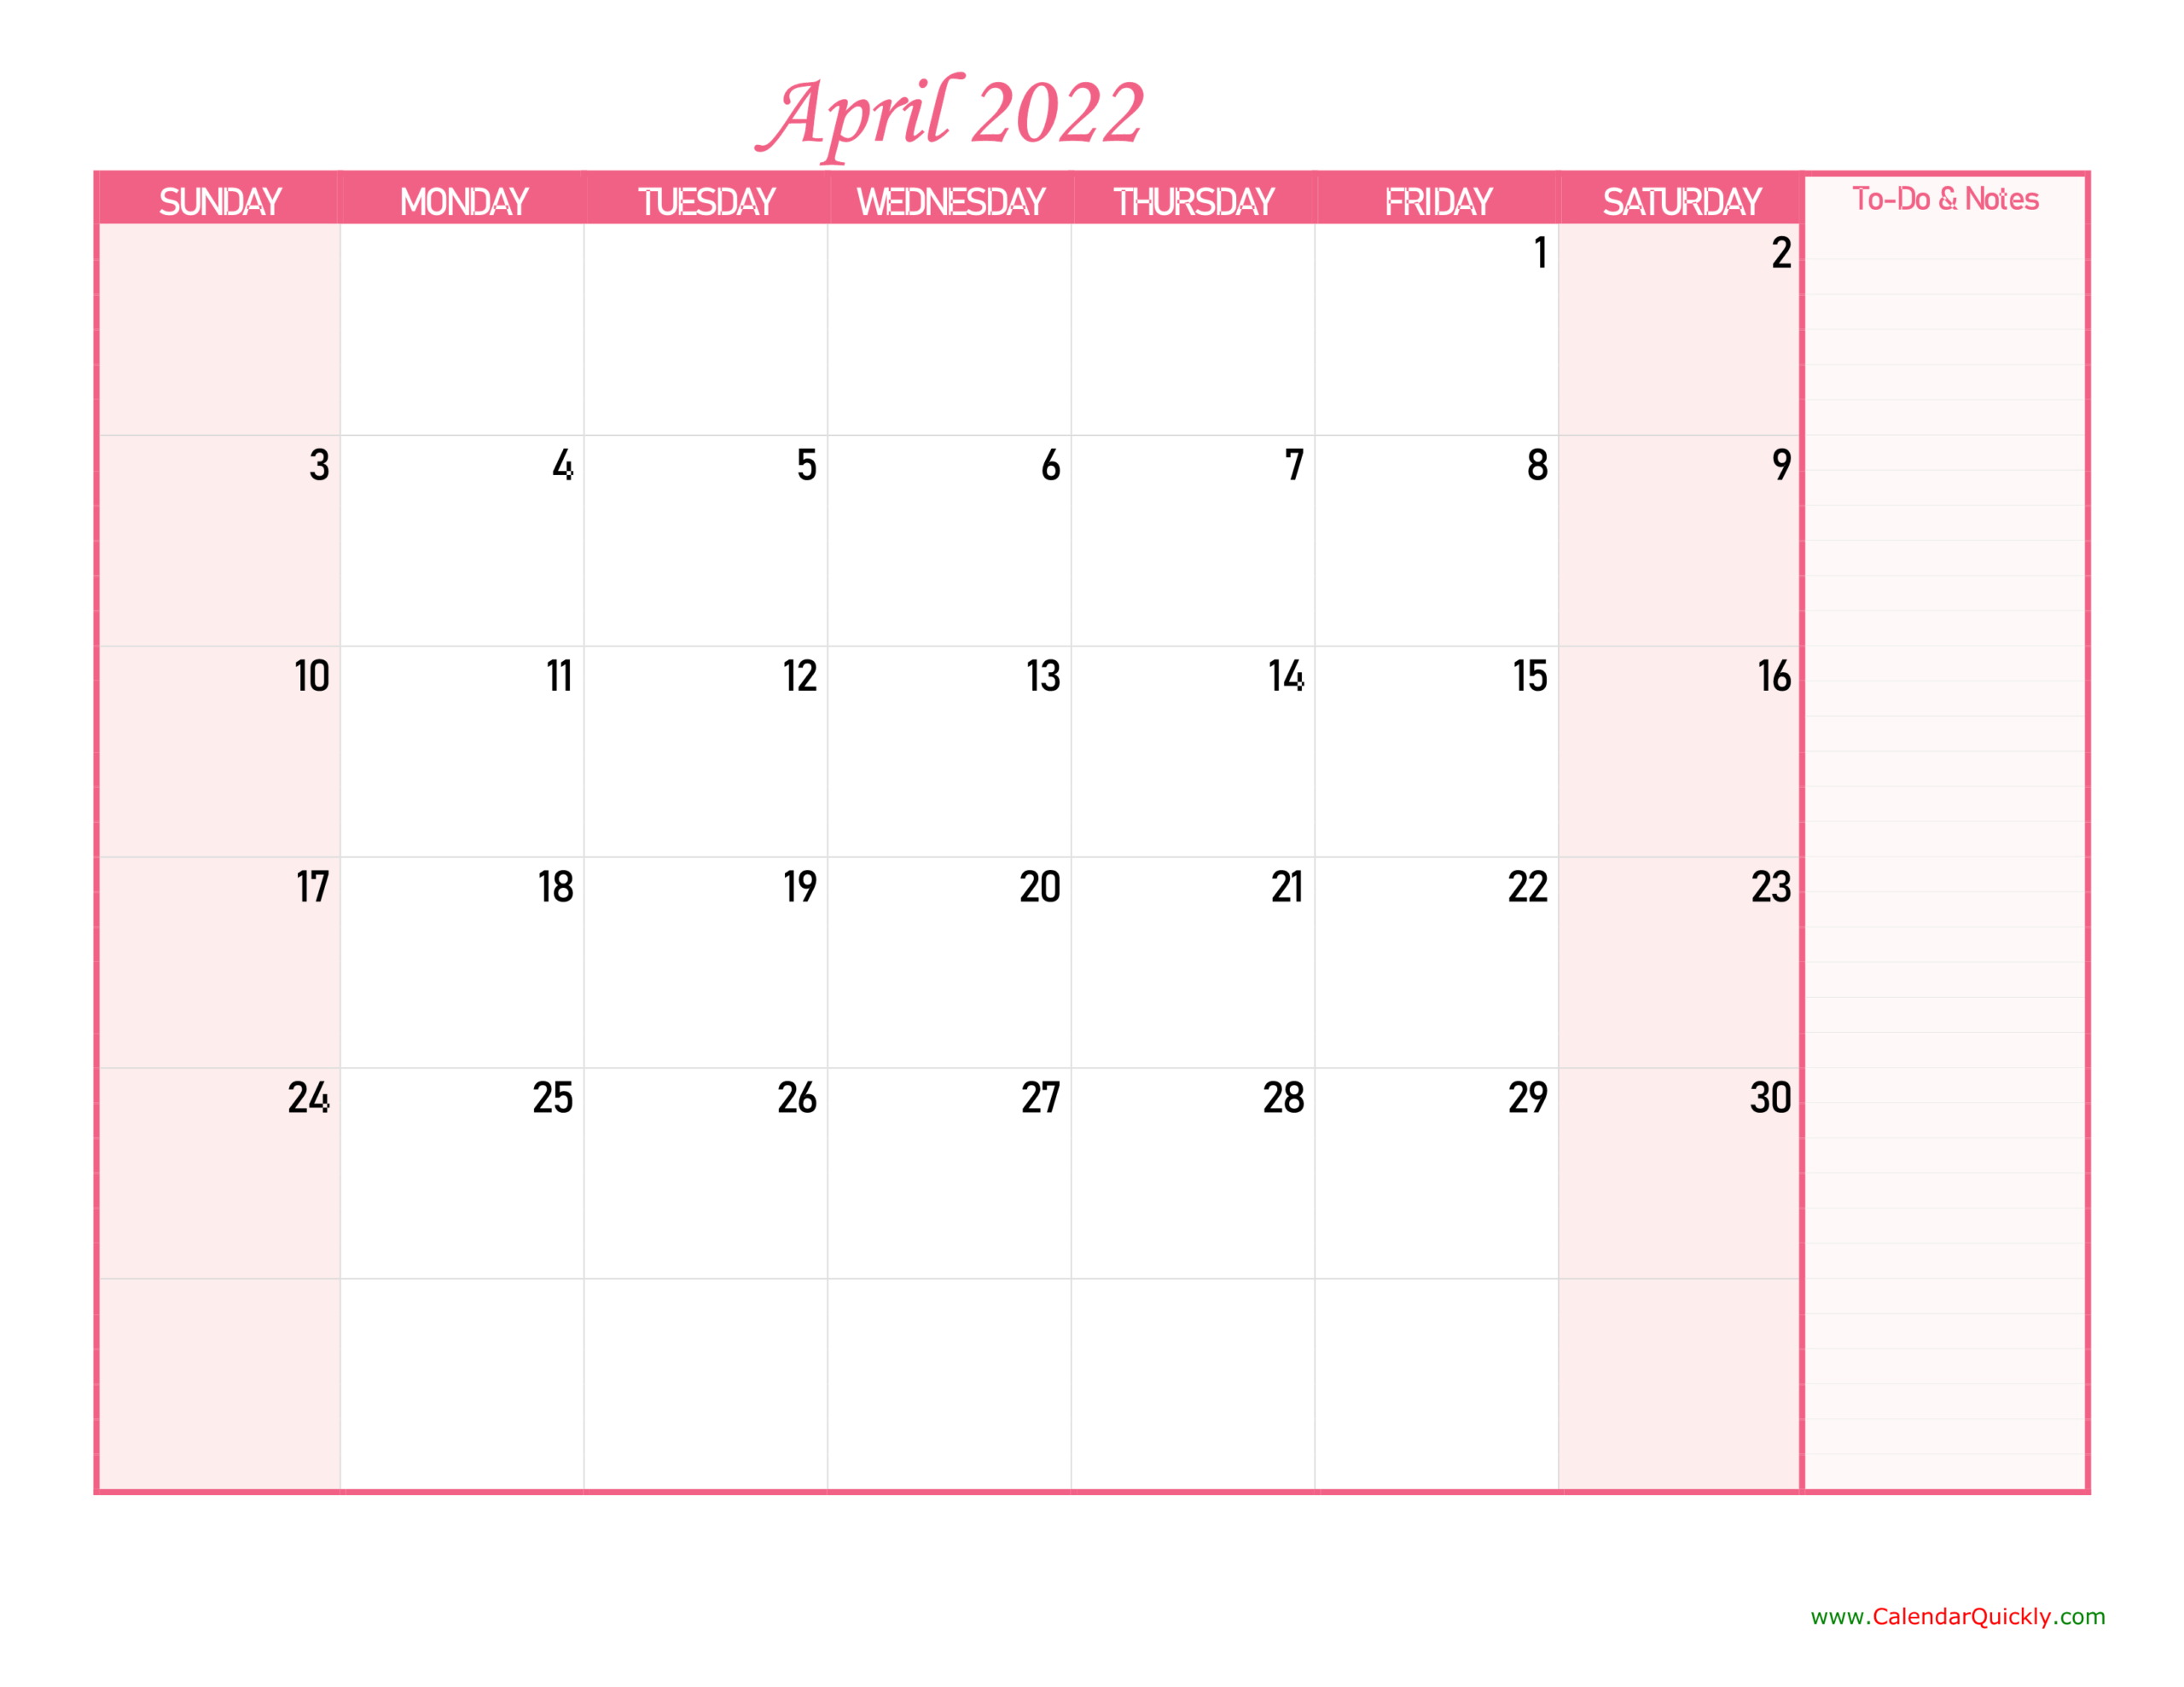 April Calendar 2022 With Notes | Calendar Quickly  Calendar February March April 2022